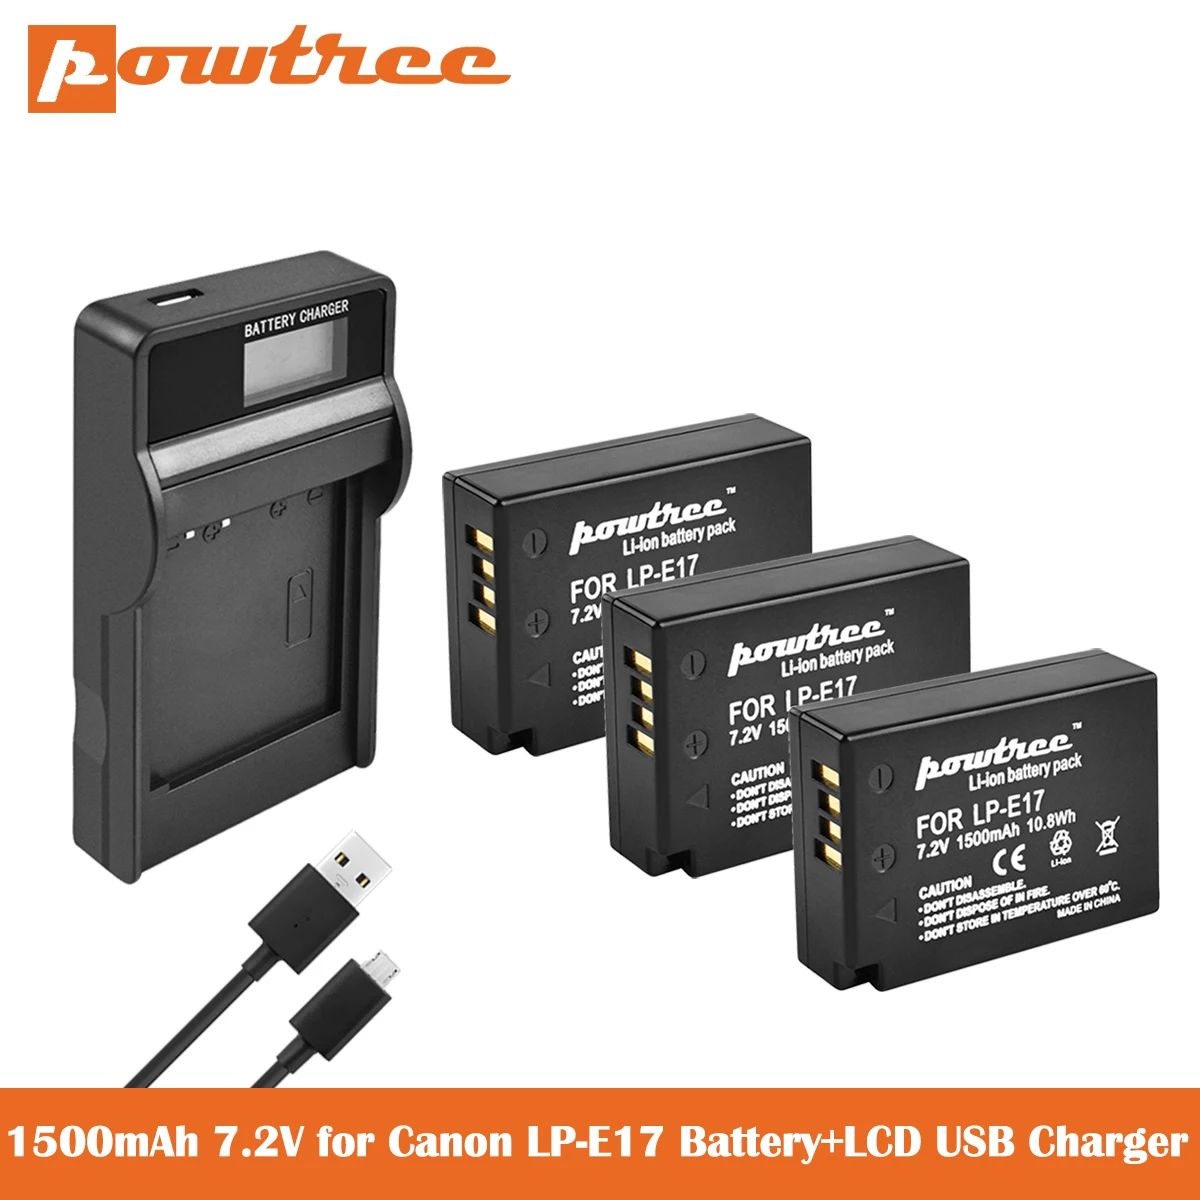 Powtree LP-E17 LPE17 LP E17 Batérie+LCD USB Nabíjačka pre Canon EOS M3 M5 M6 Rebel T6i T7i EOS 77D 750D 760D T6i T6s 800D 8000D L7